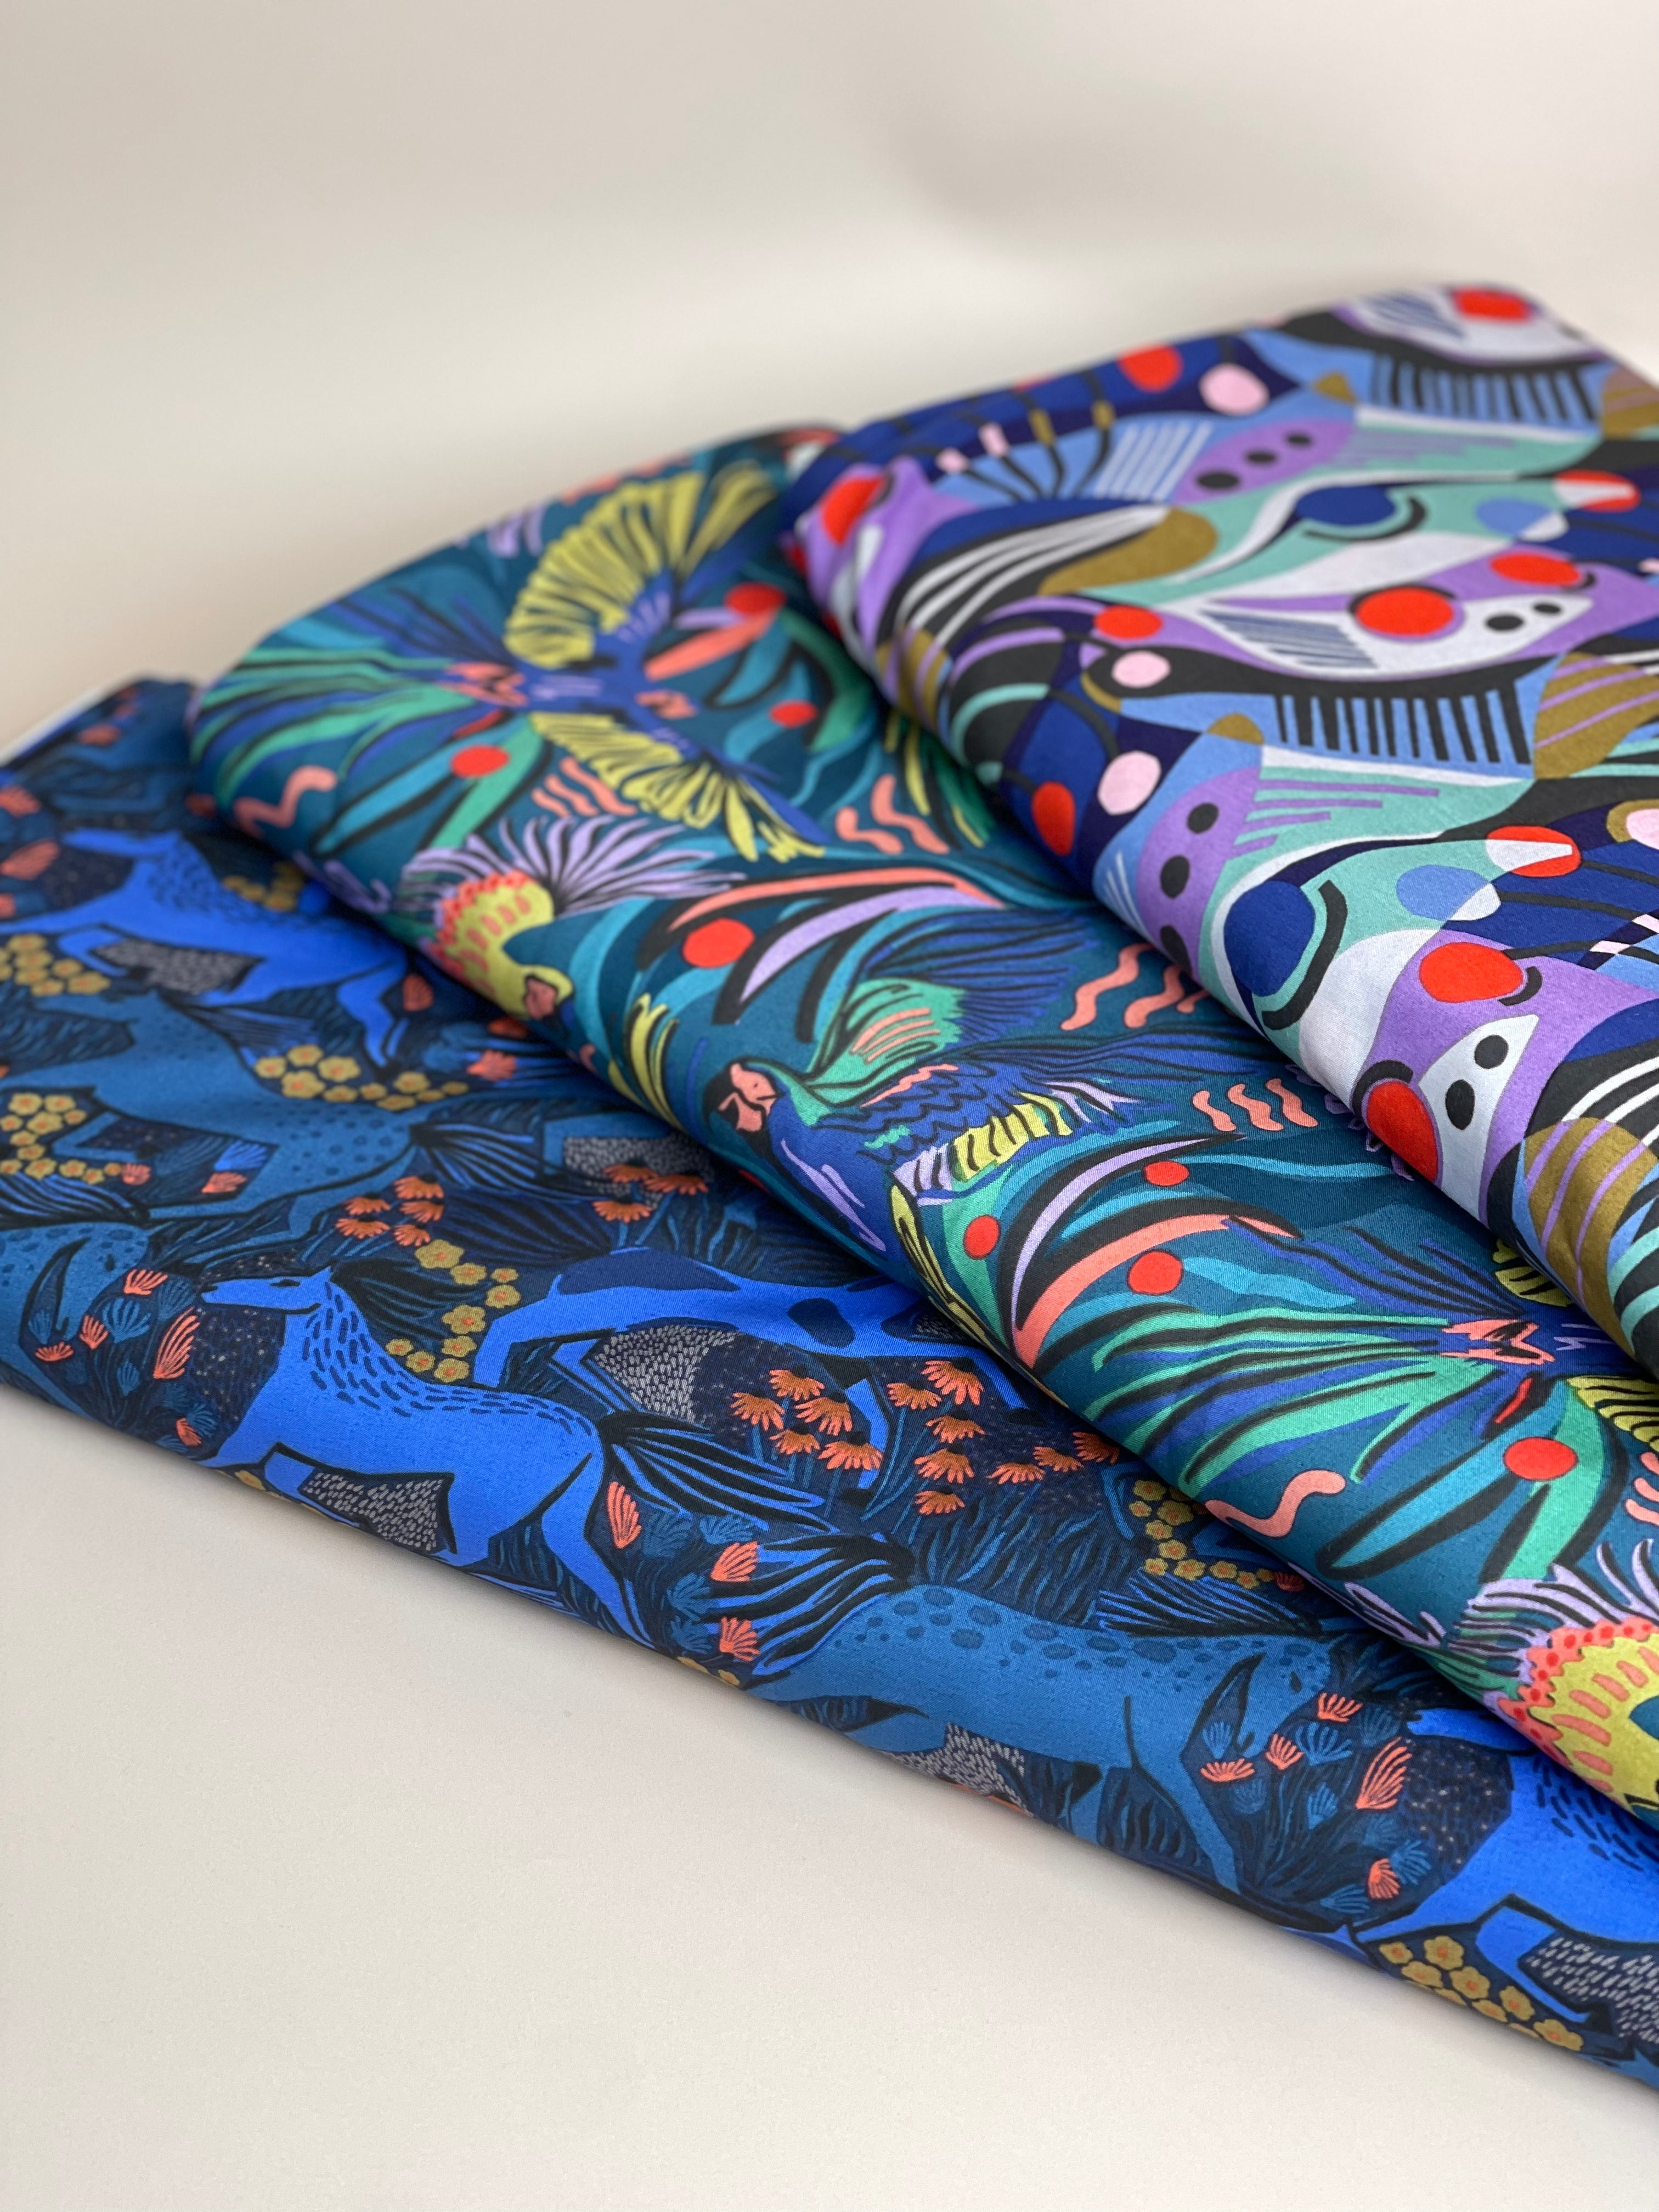 Cloud 9 Fabrics - Wild Horses from Wildscape Modal Rayon